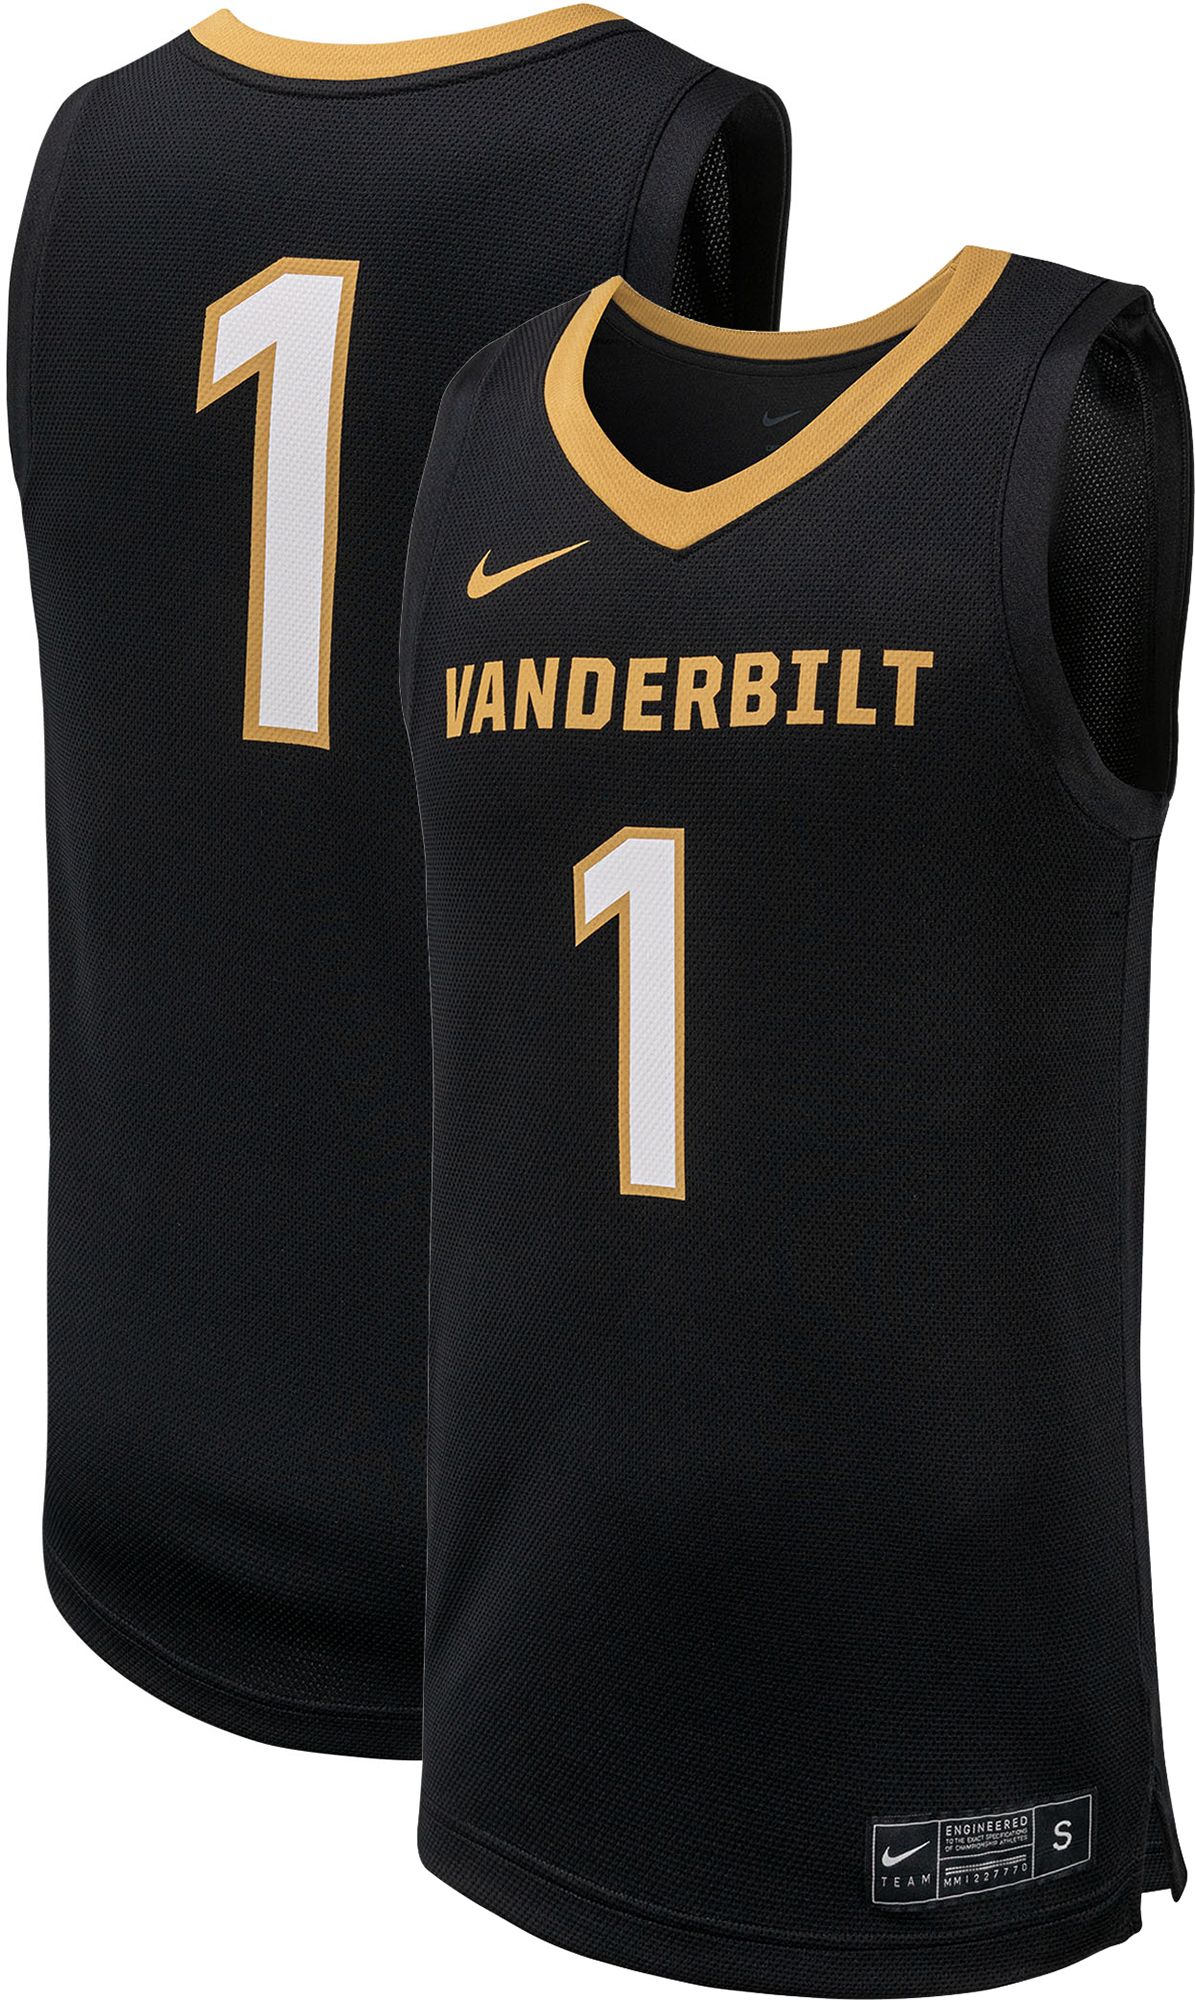 Nike Men's Vanderbilt Commodores #1 Black Replica Basketball Jersey